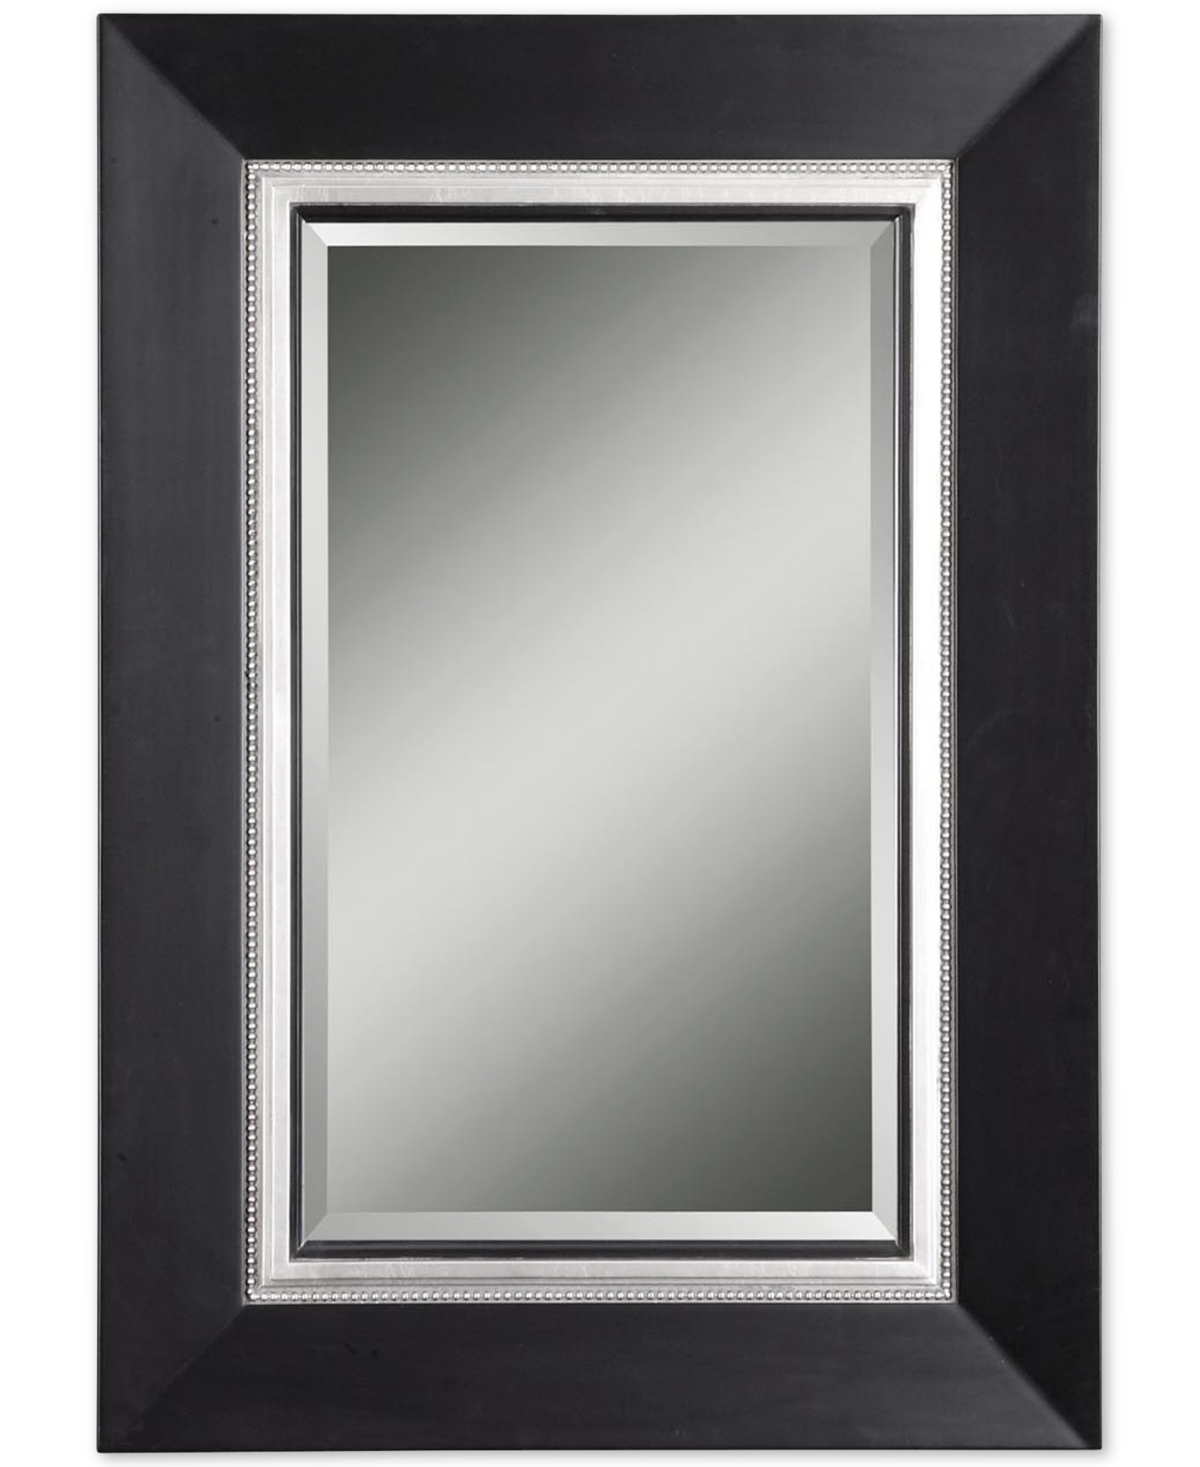 Uttermost Whitmore Black Vanity Mirror